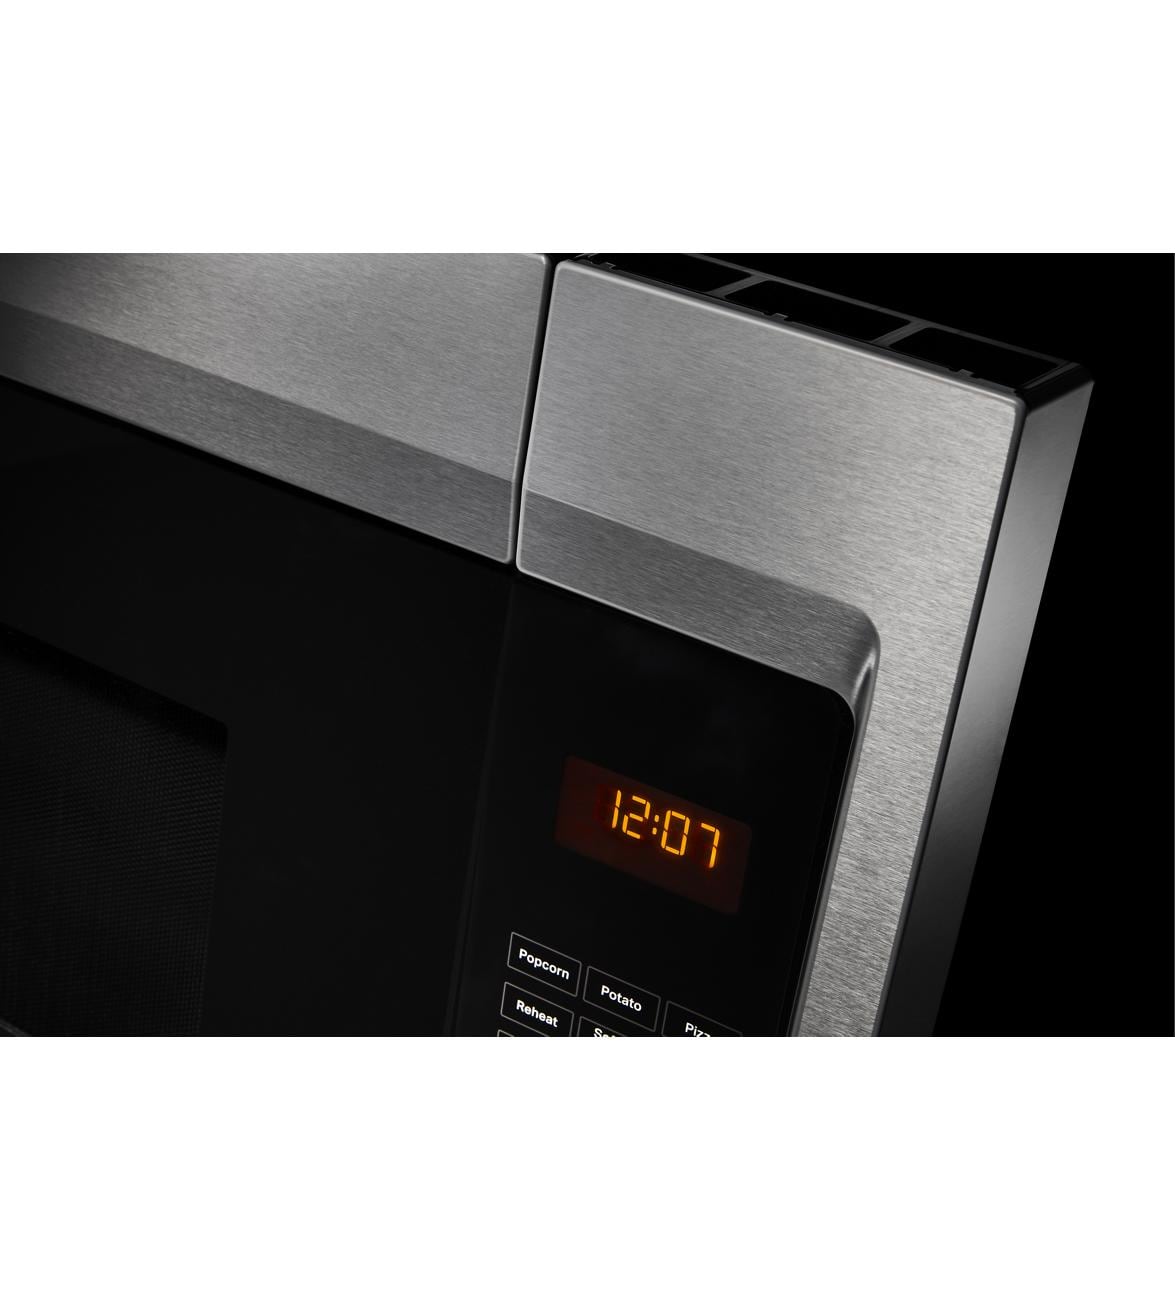 30″ Maytag MMV1175JZ 1.9 cu.ft. OTR Microwave Oven – Appliances TV Outlet